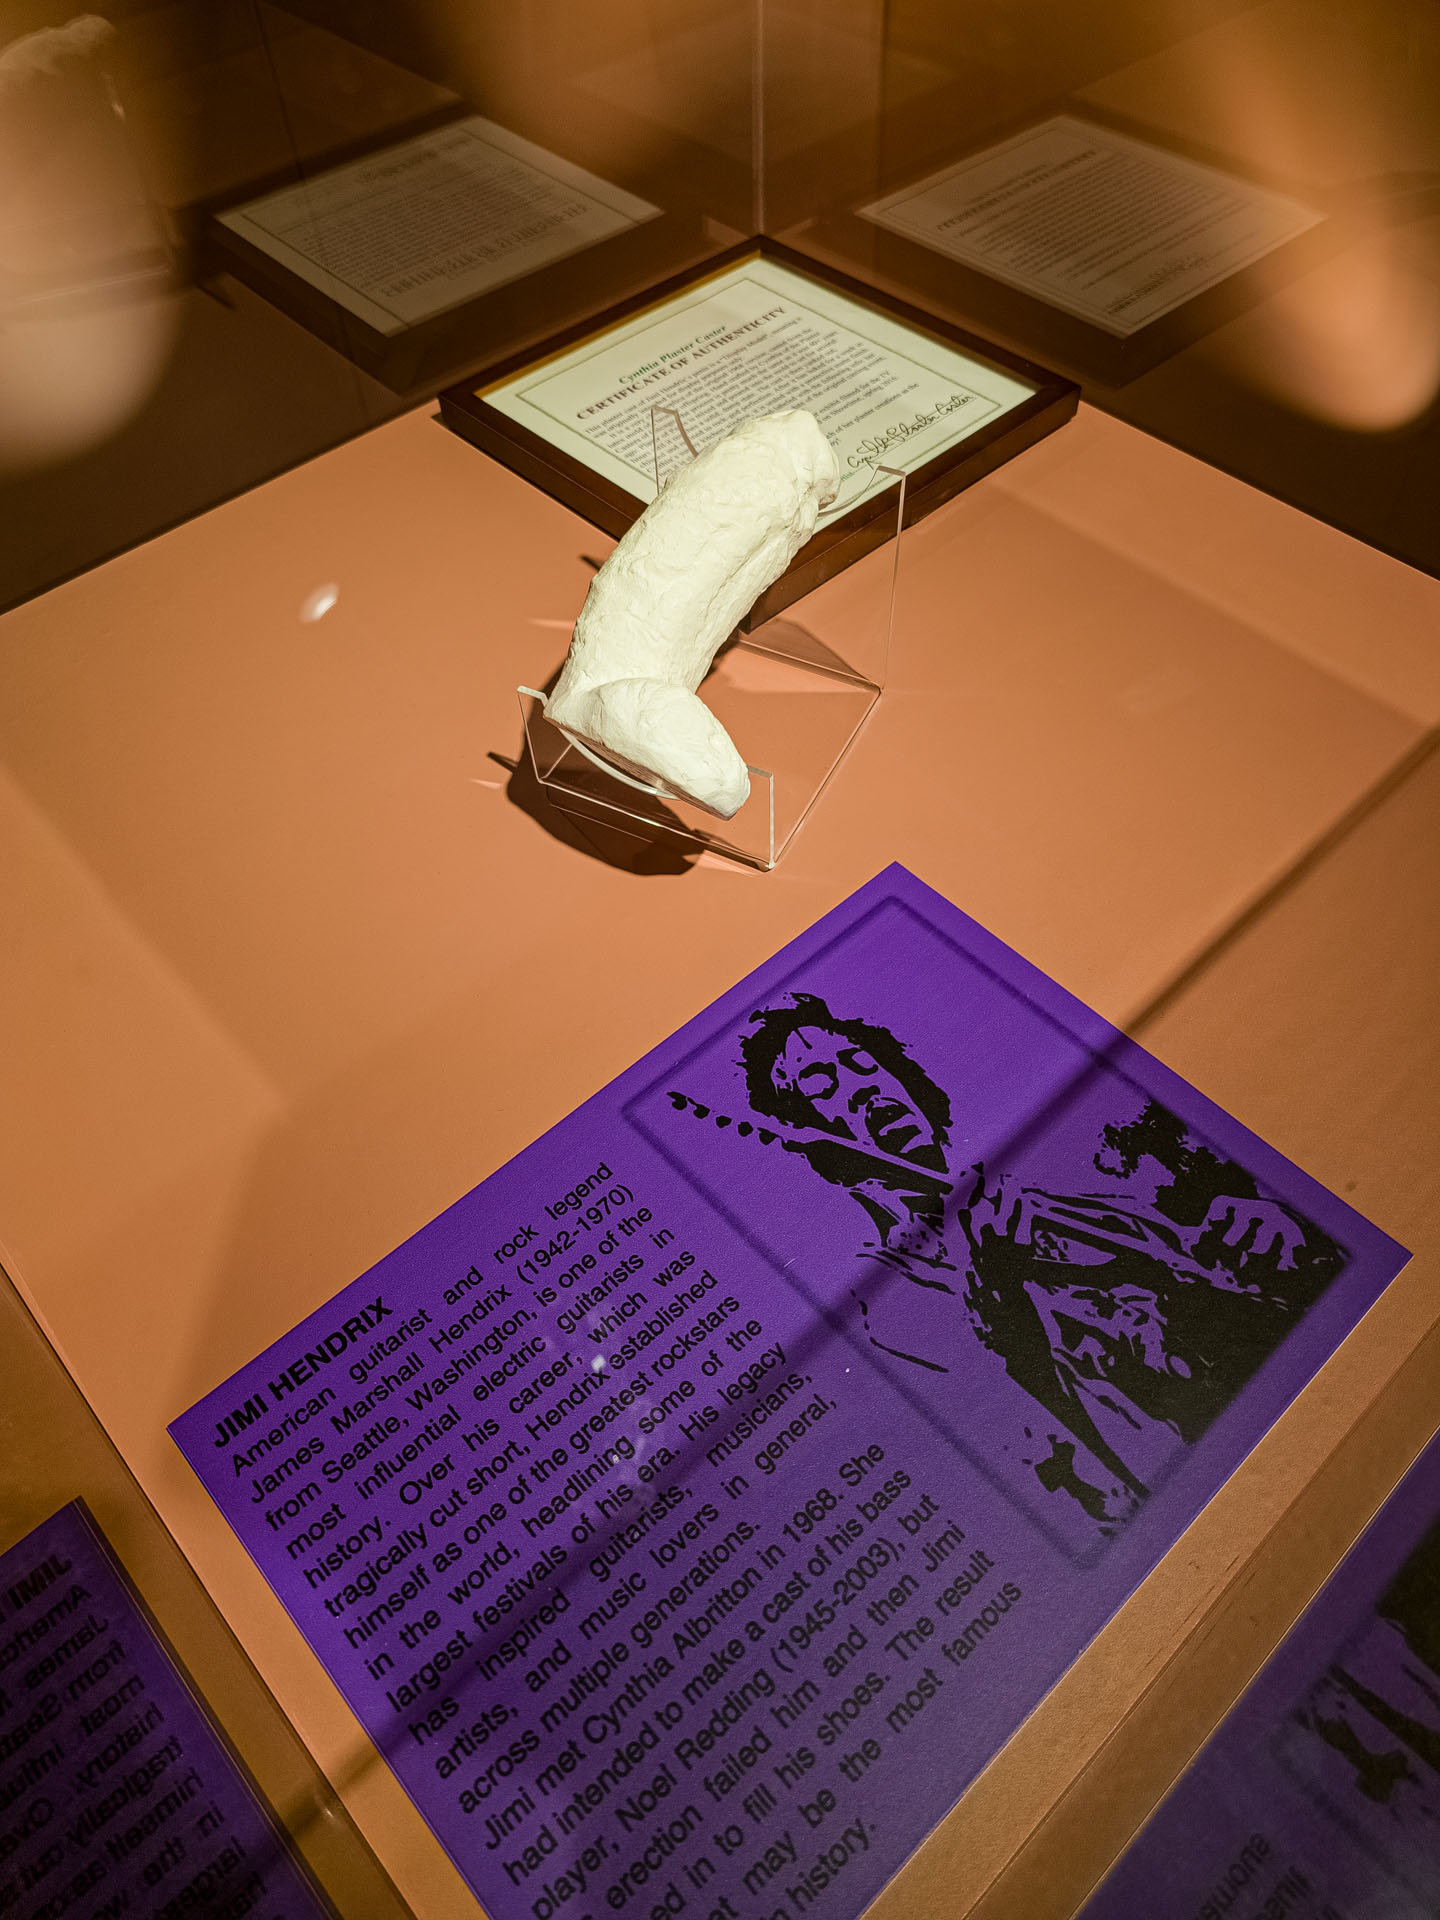 Jimi Henrix's penis at the Icelandic Phallological Museum